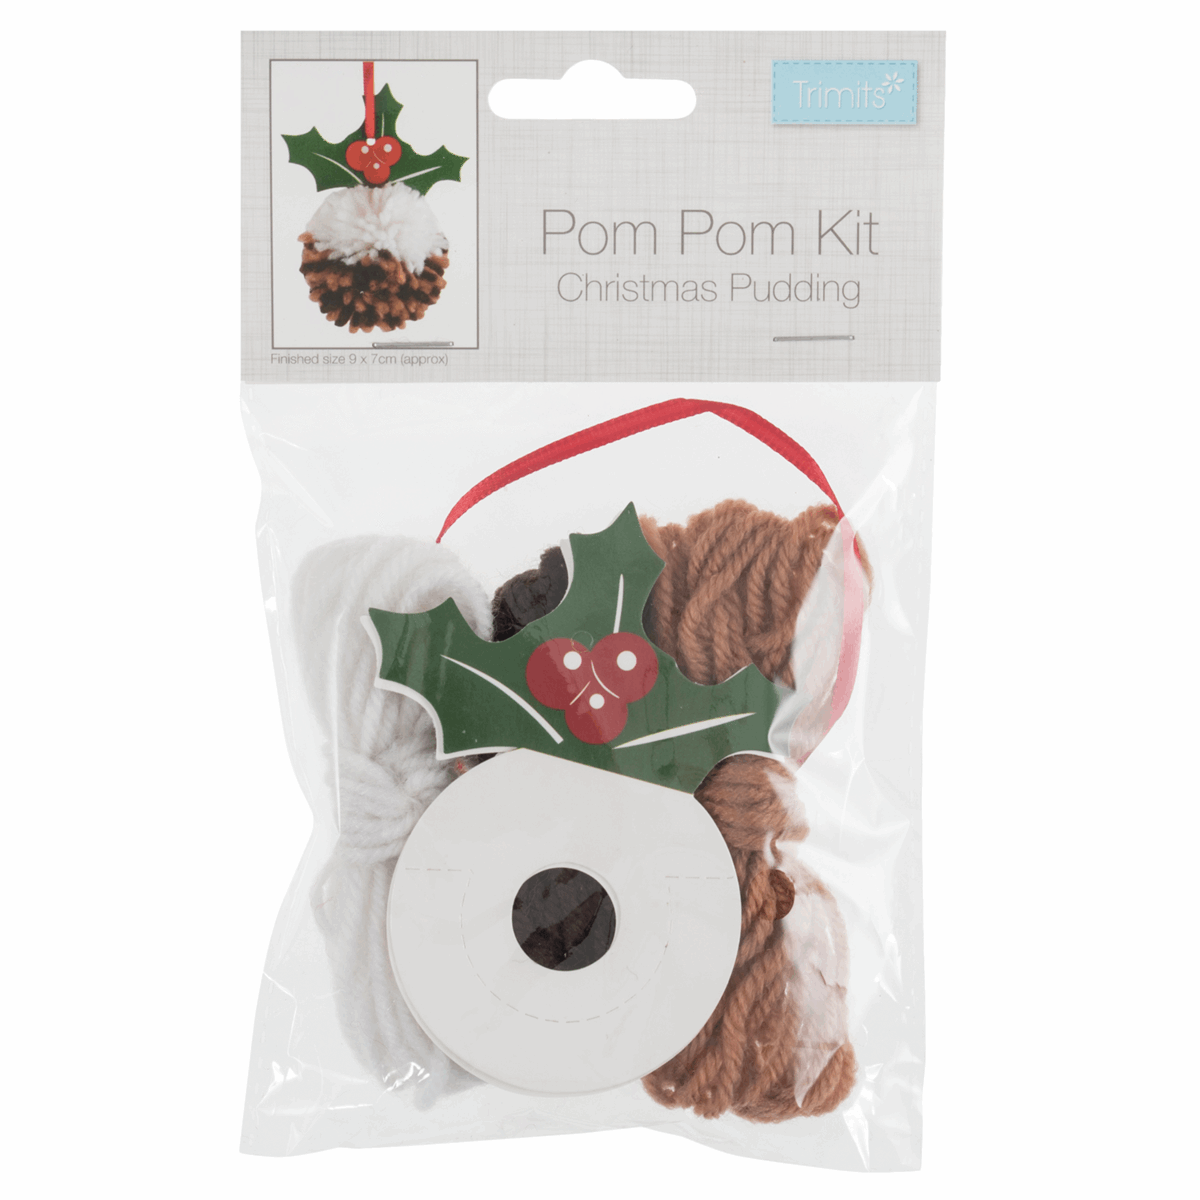 Trimits Pom Pom Decoration Kit - Christmas Pudding